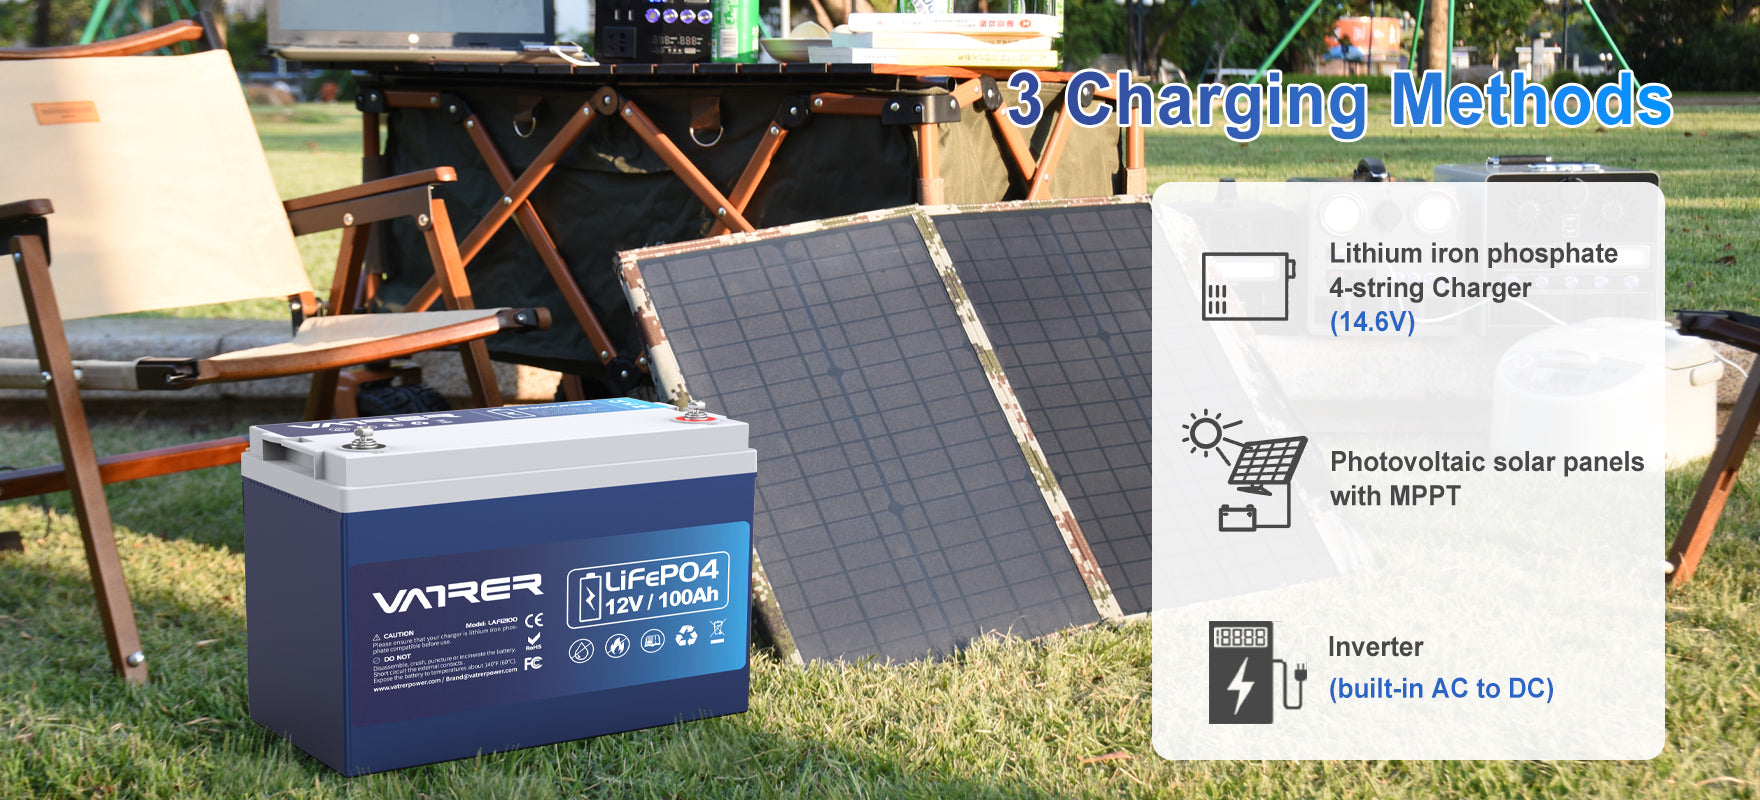 12v 100ah lithium ion battery charging methods